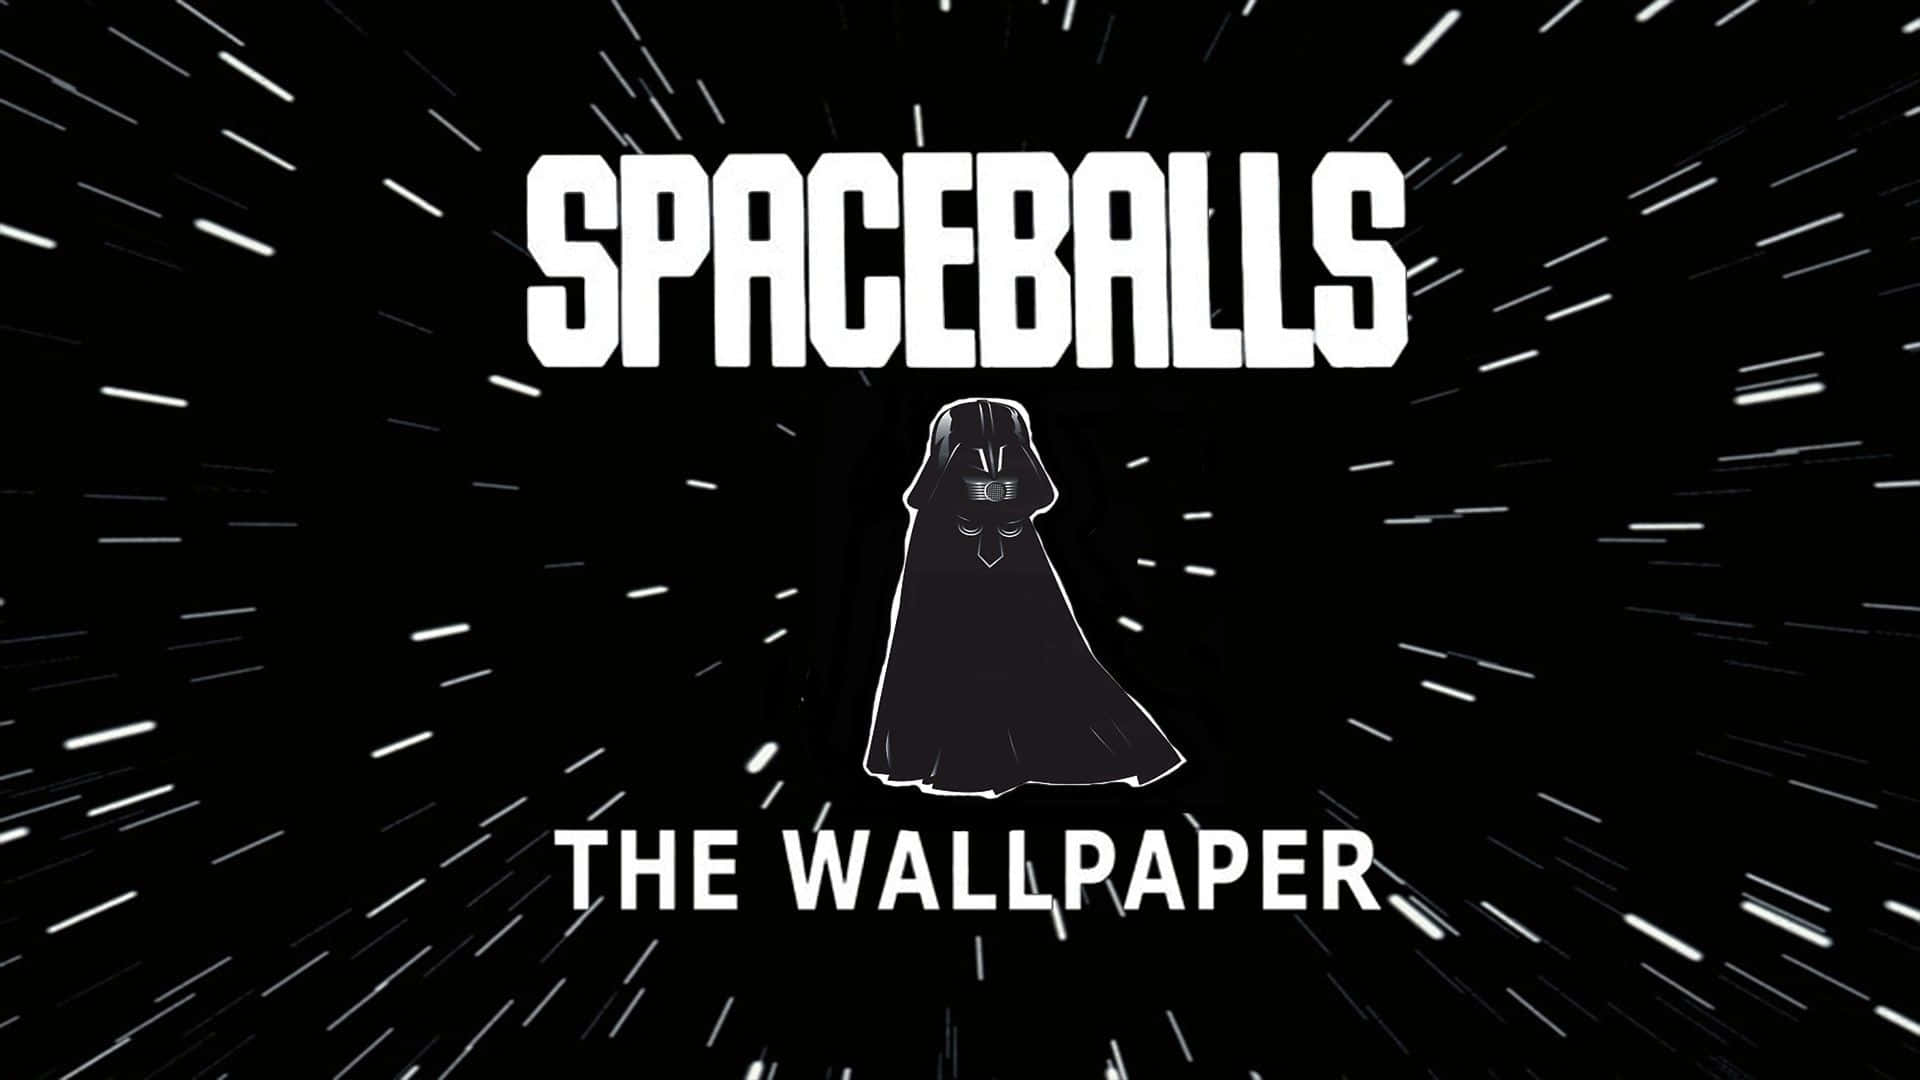 Spaceballs Star Wars Parody